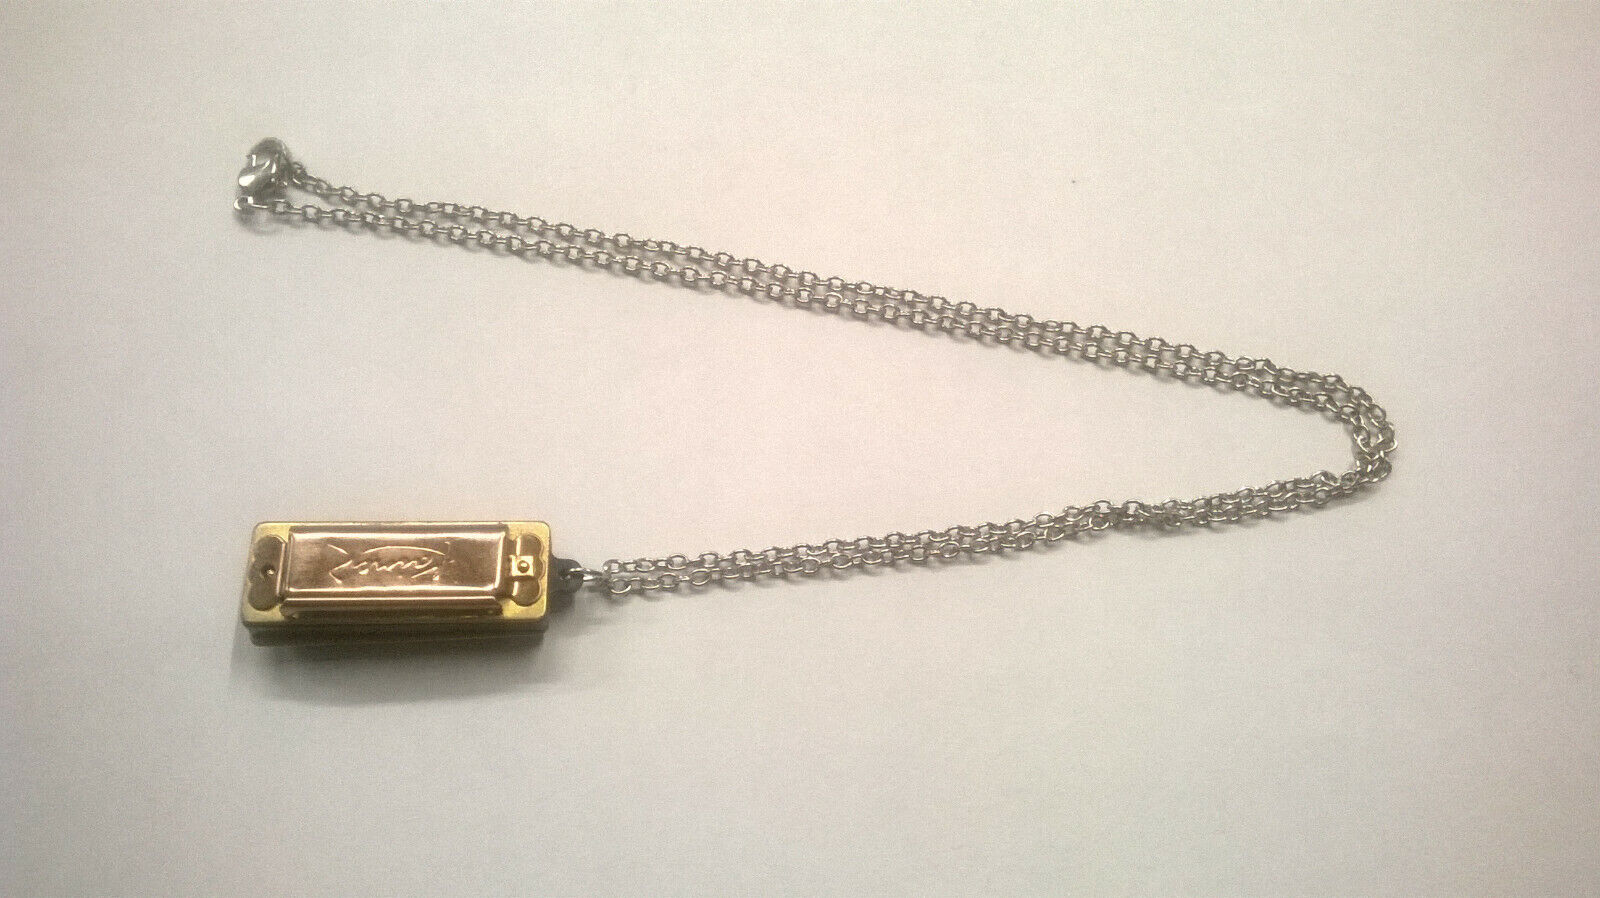 Mini harmonica necklace, metal